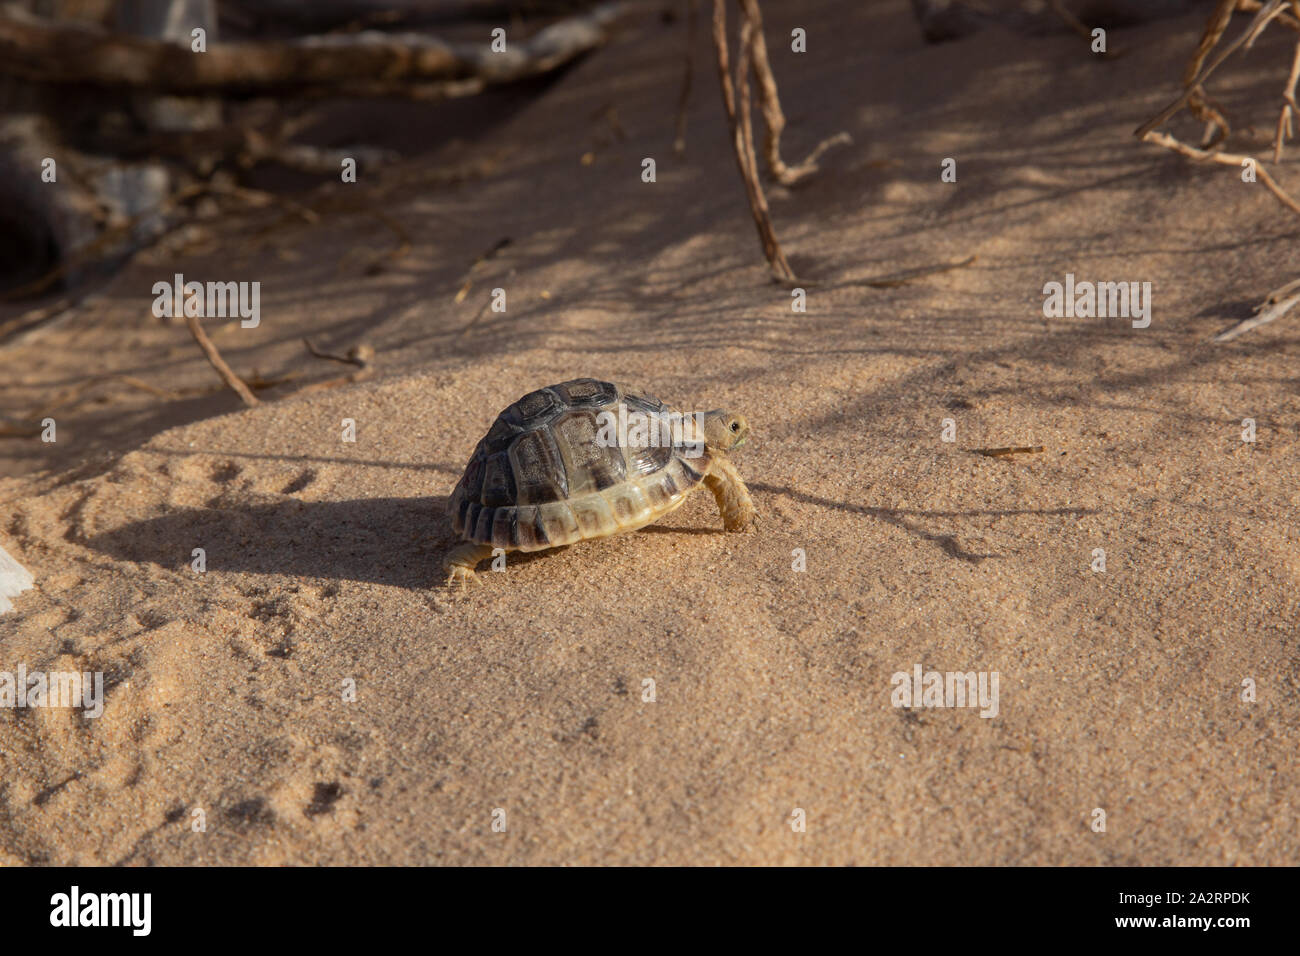 Negev Tortoise (Testudo werneri) צב יבשה מדברי Stock Photo